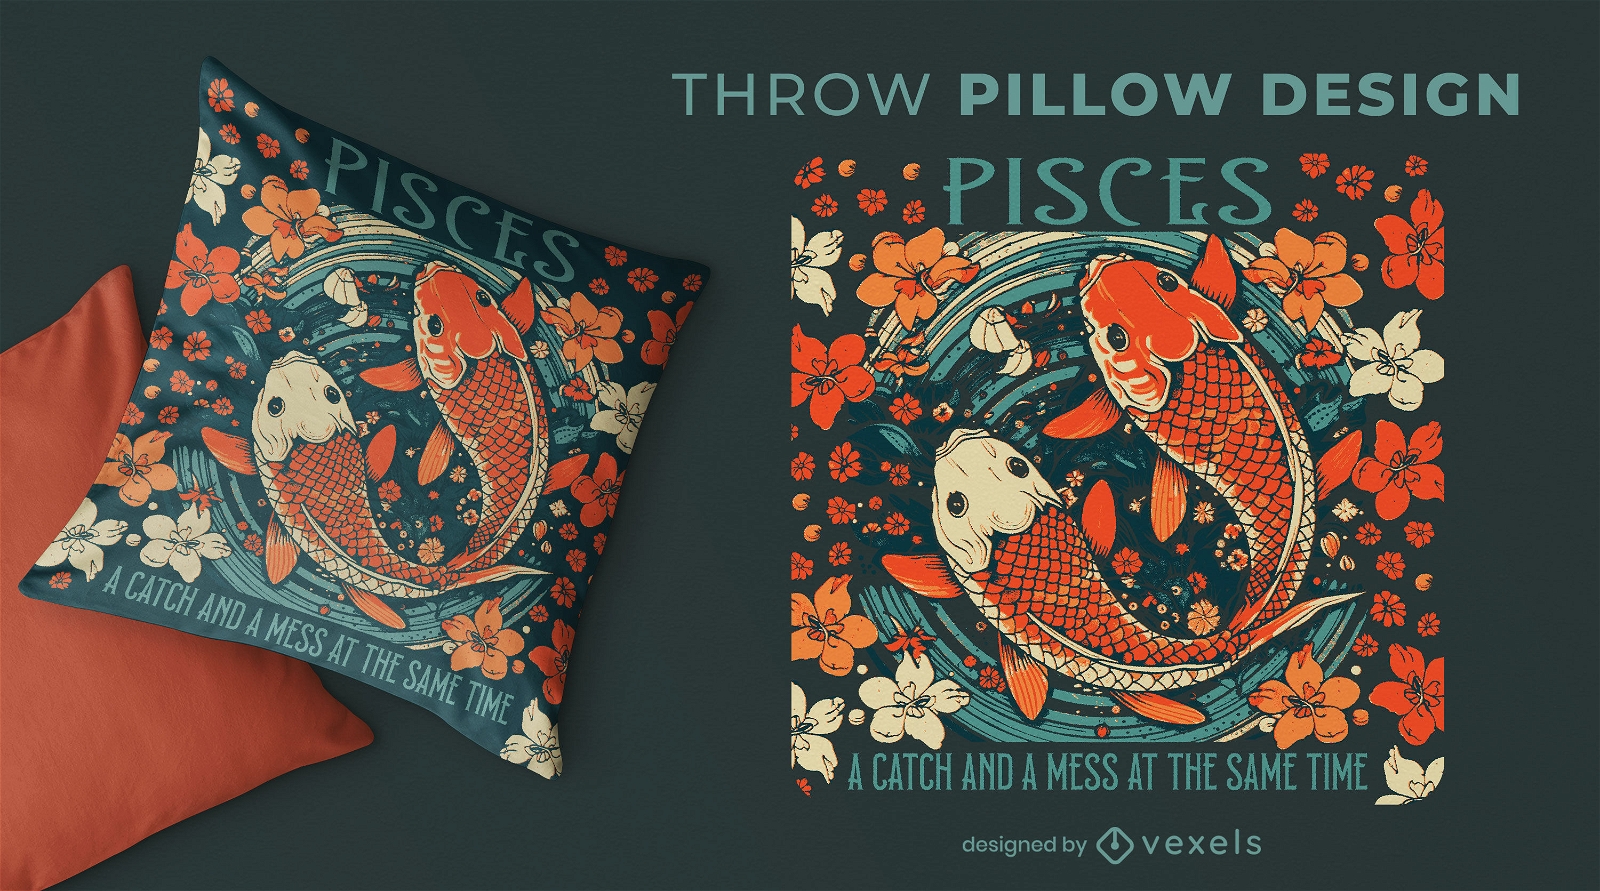 Pisces themed pillow design